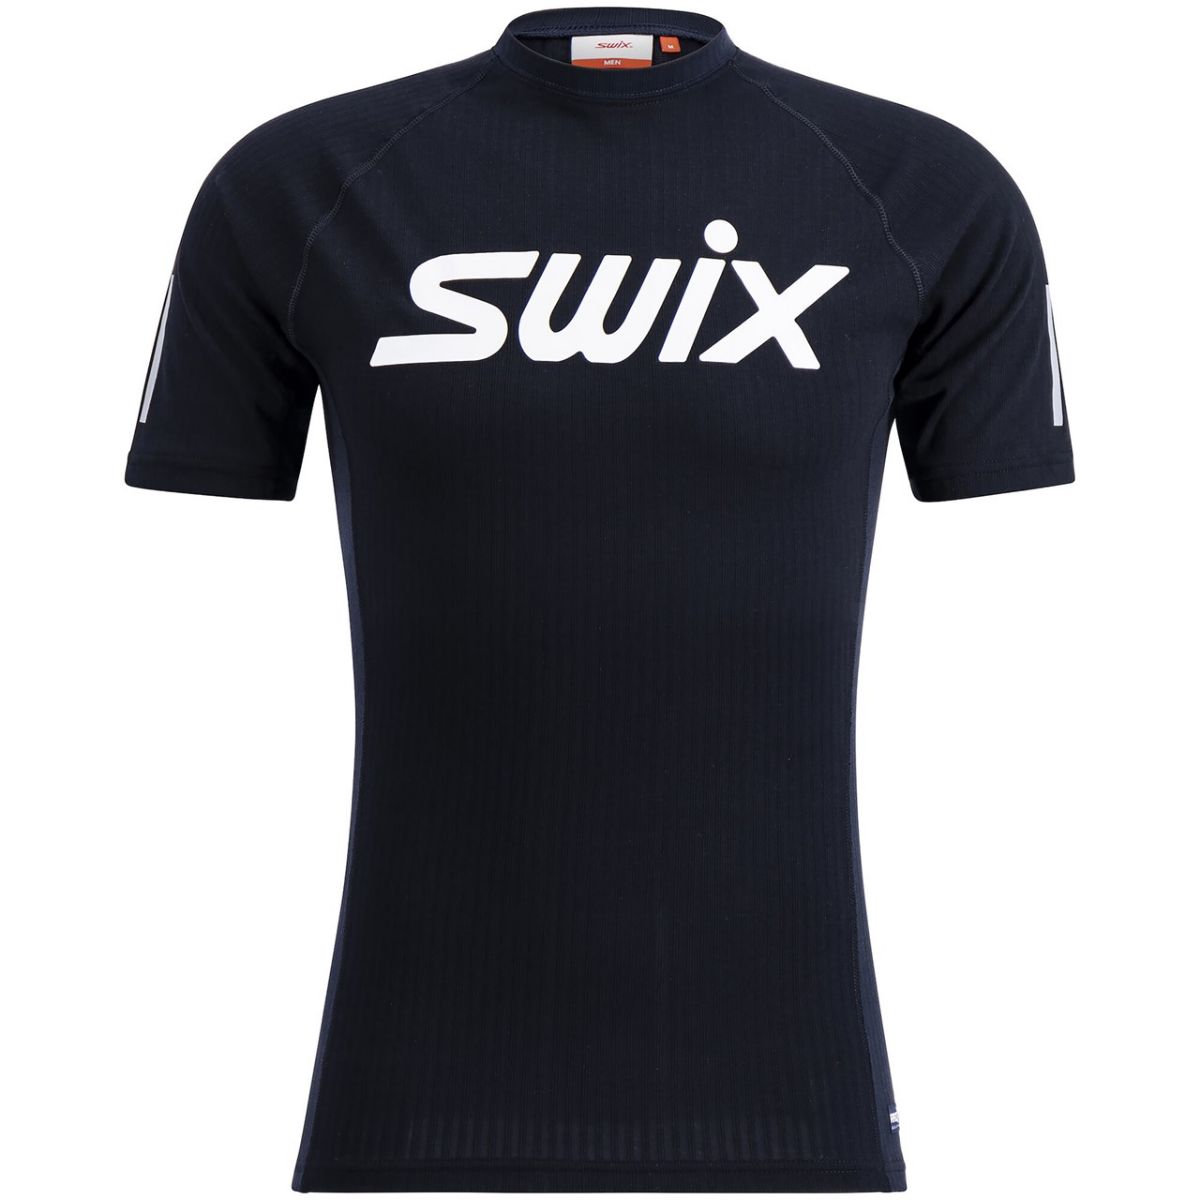 swix-roadline-racex-short-sleeve-m-blackdark-navy